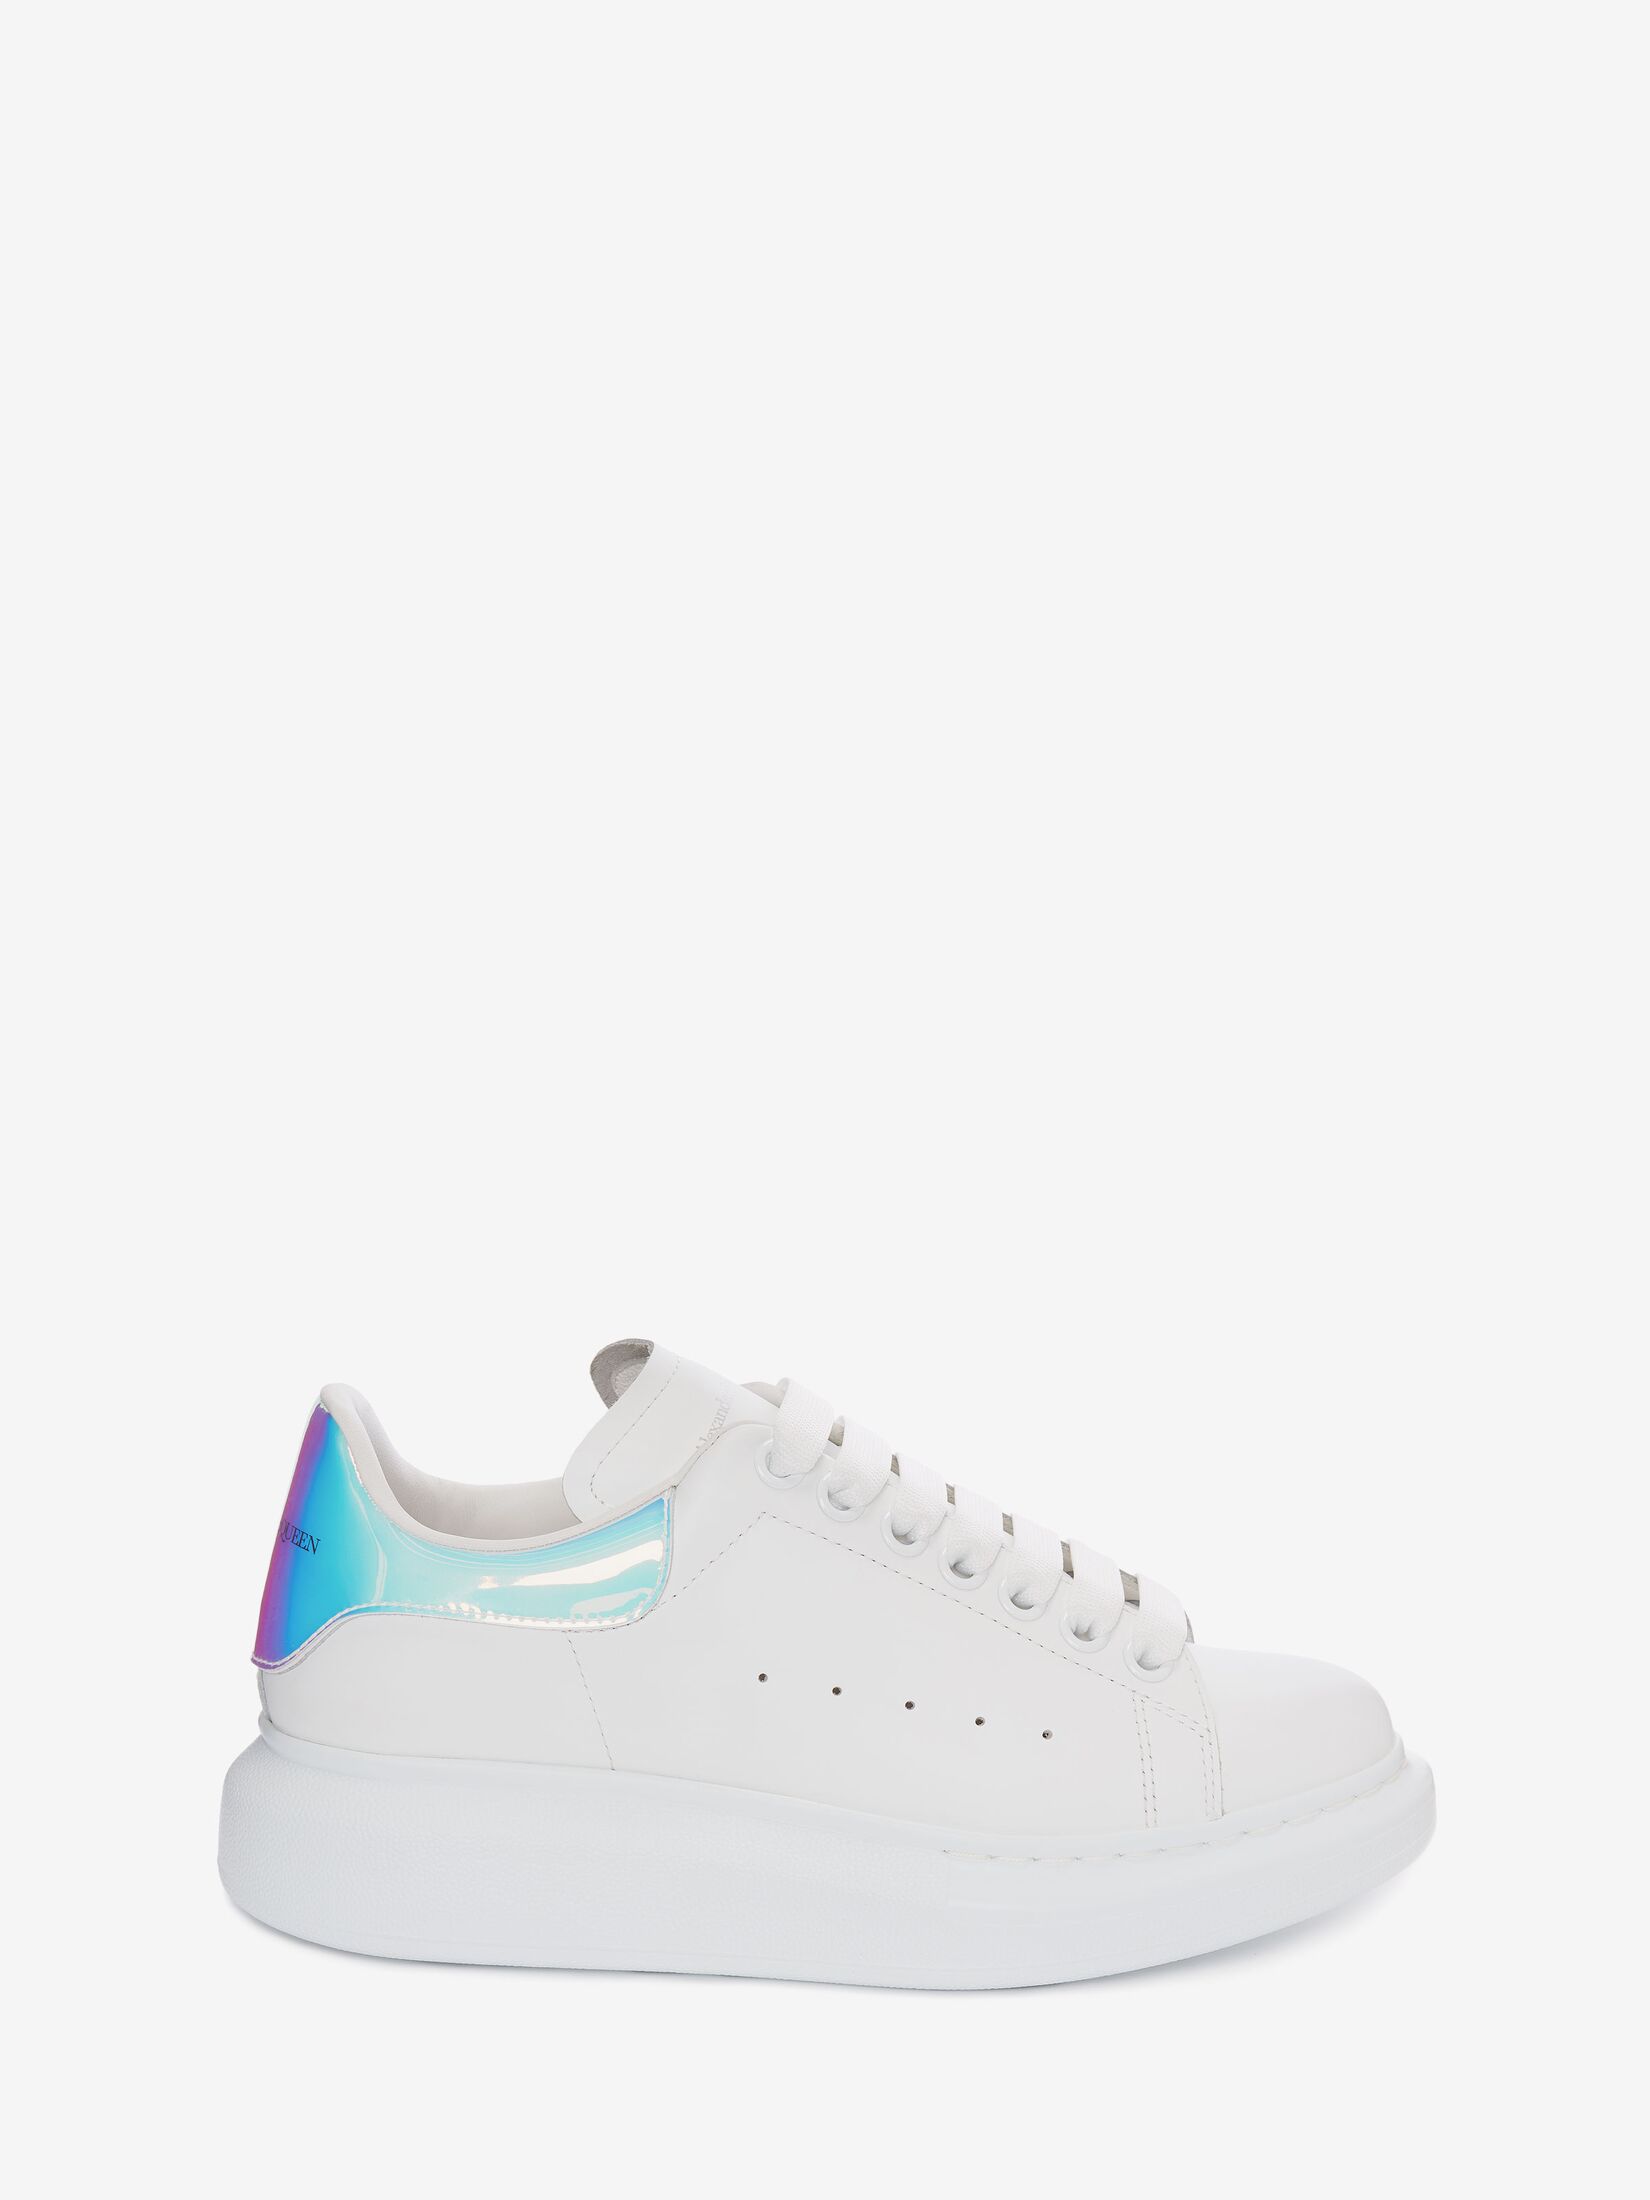 Alexander McQueen Reflective Sneakers in White | Lyst